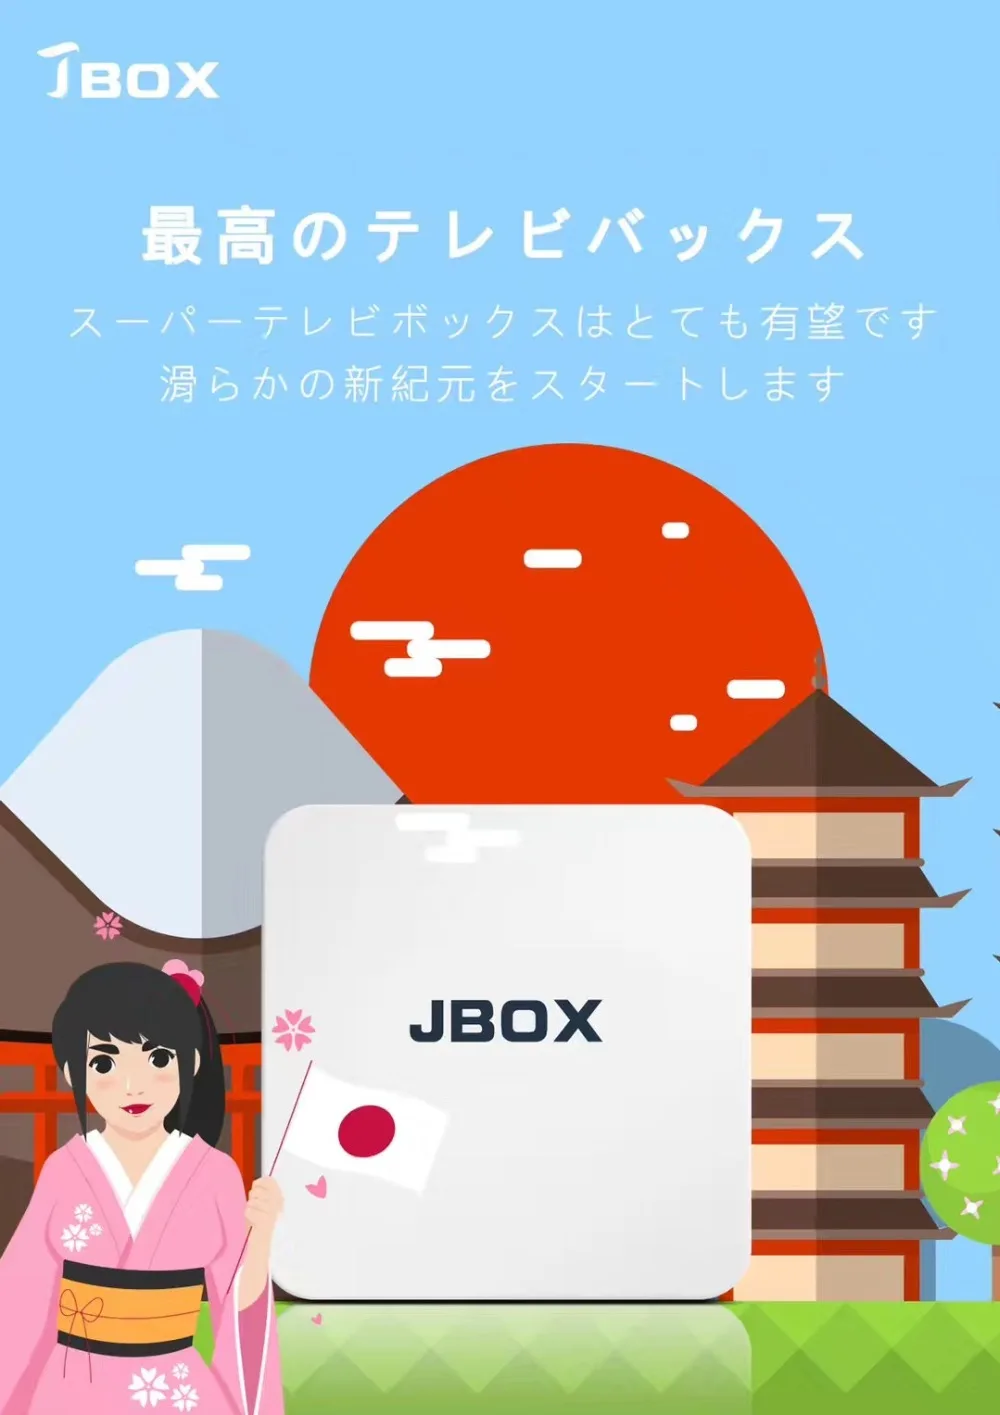 Разблокировка Tech Ubox PRO JBOX японская версия HDMI 2,0 tv box Android 7,0 iP tv 1000+ воспроизведение каналов